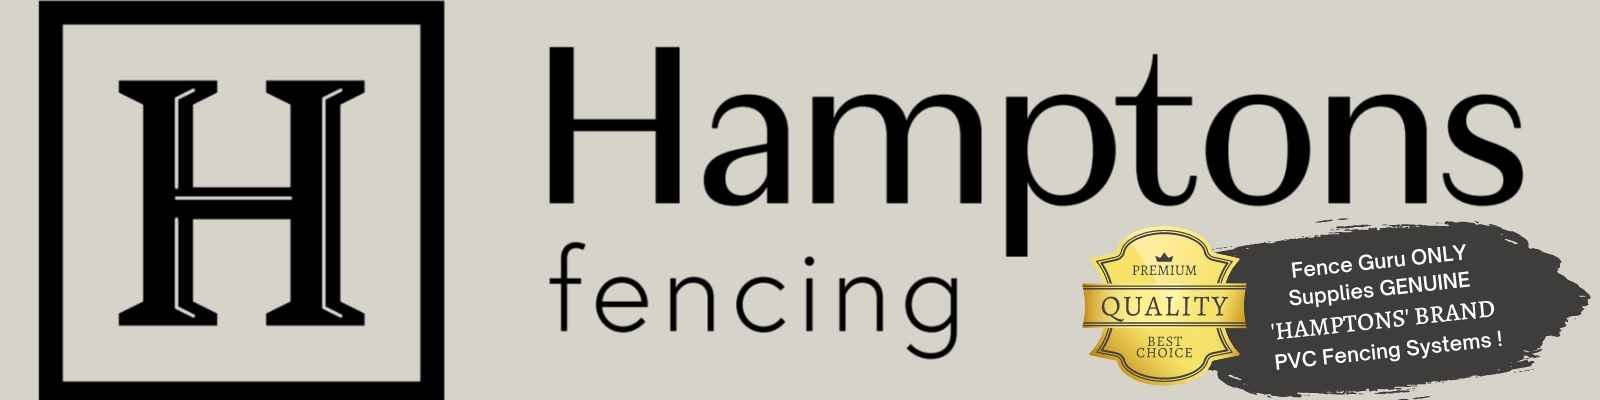 Insist on Genuine Hamptons Premium PVC Fencing Systems